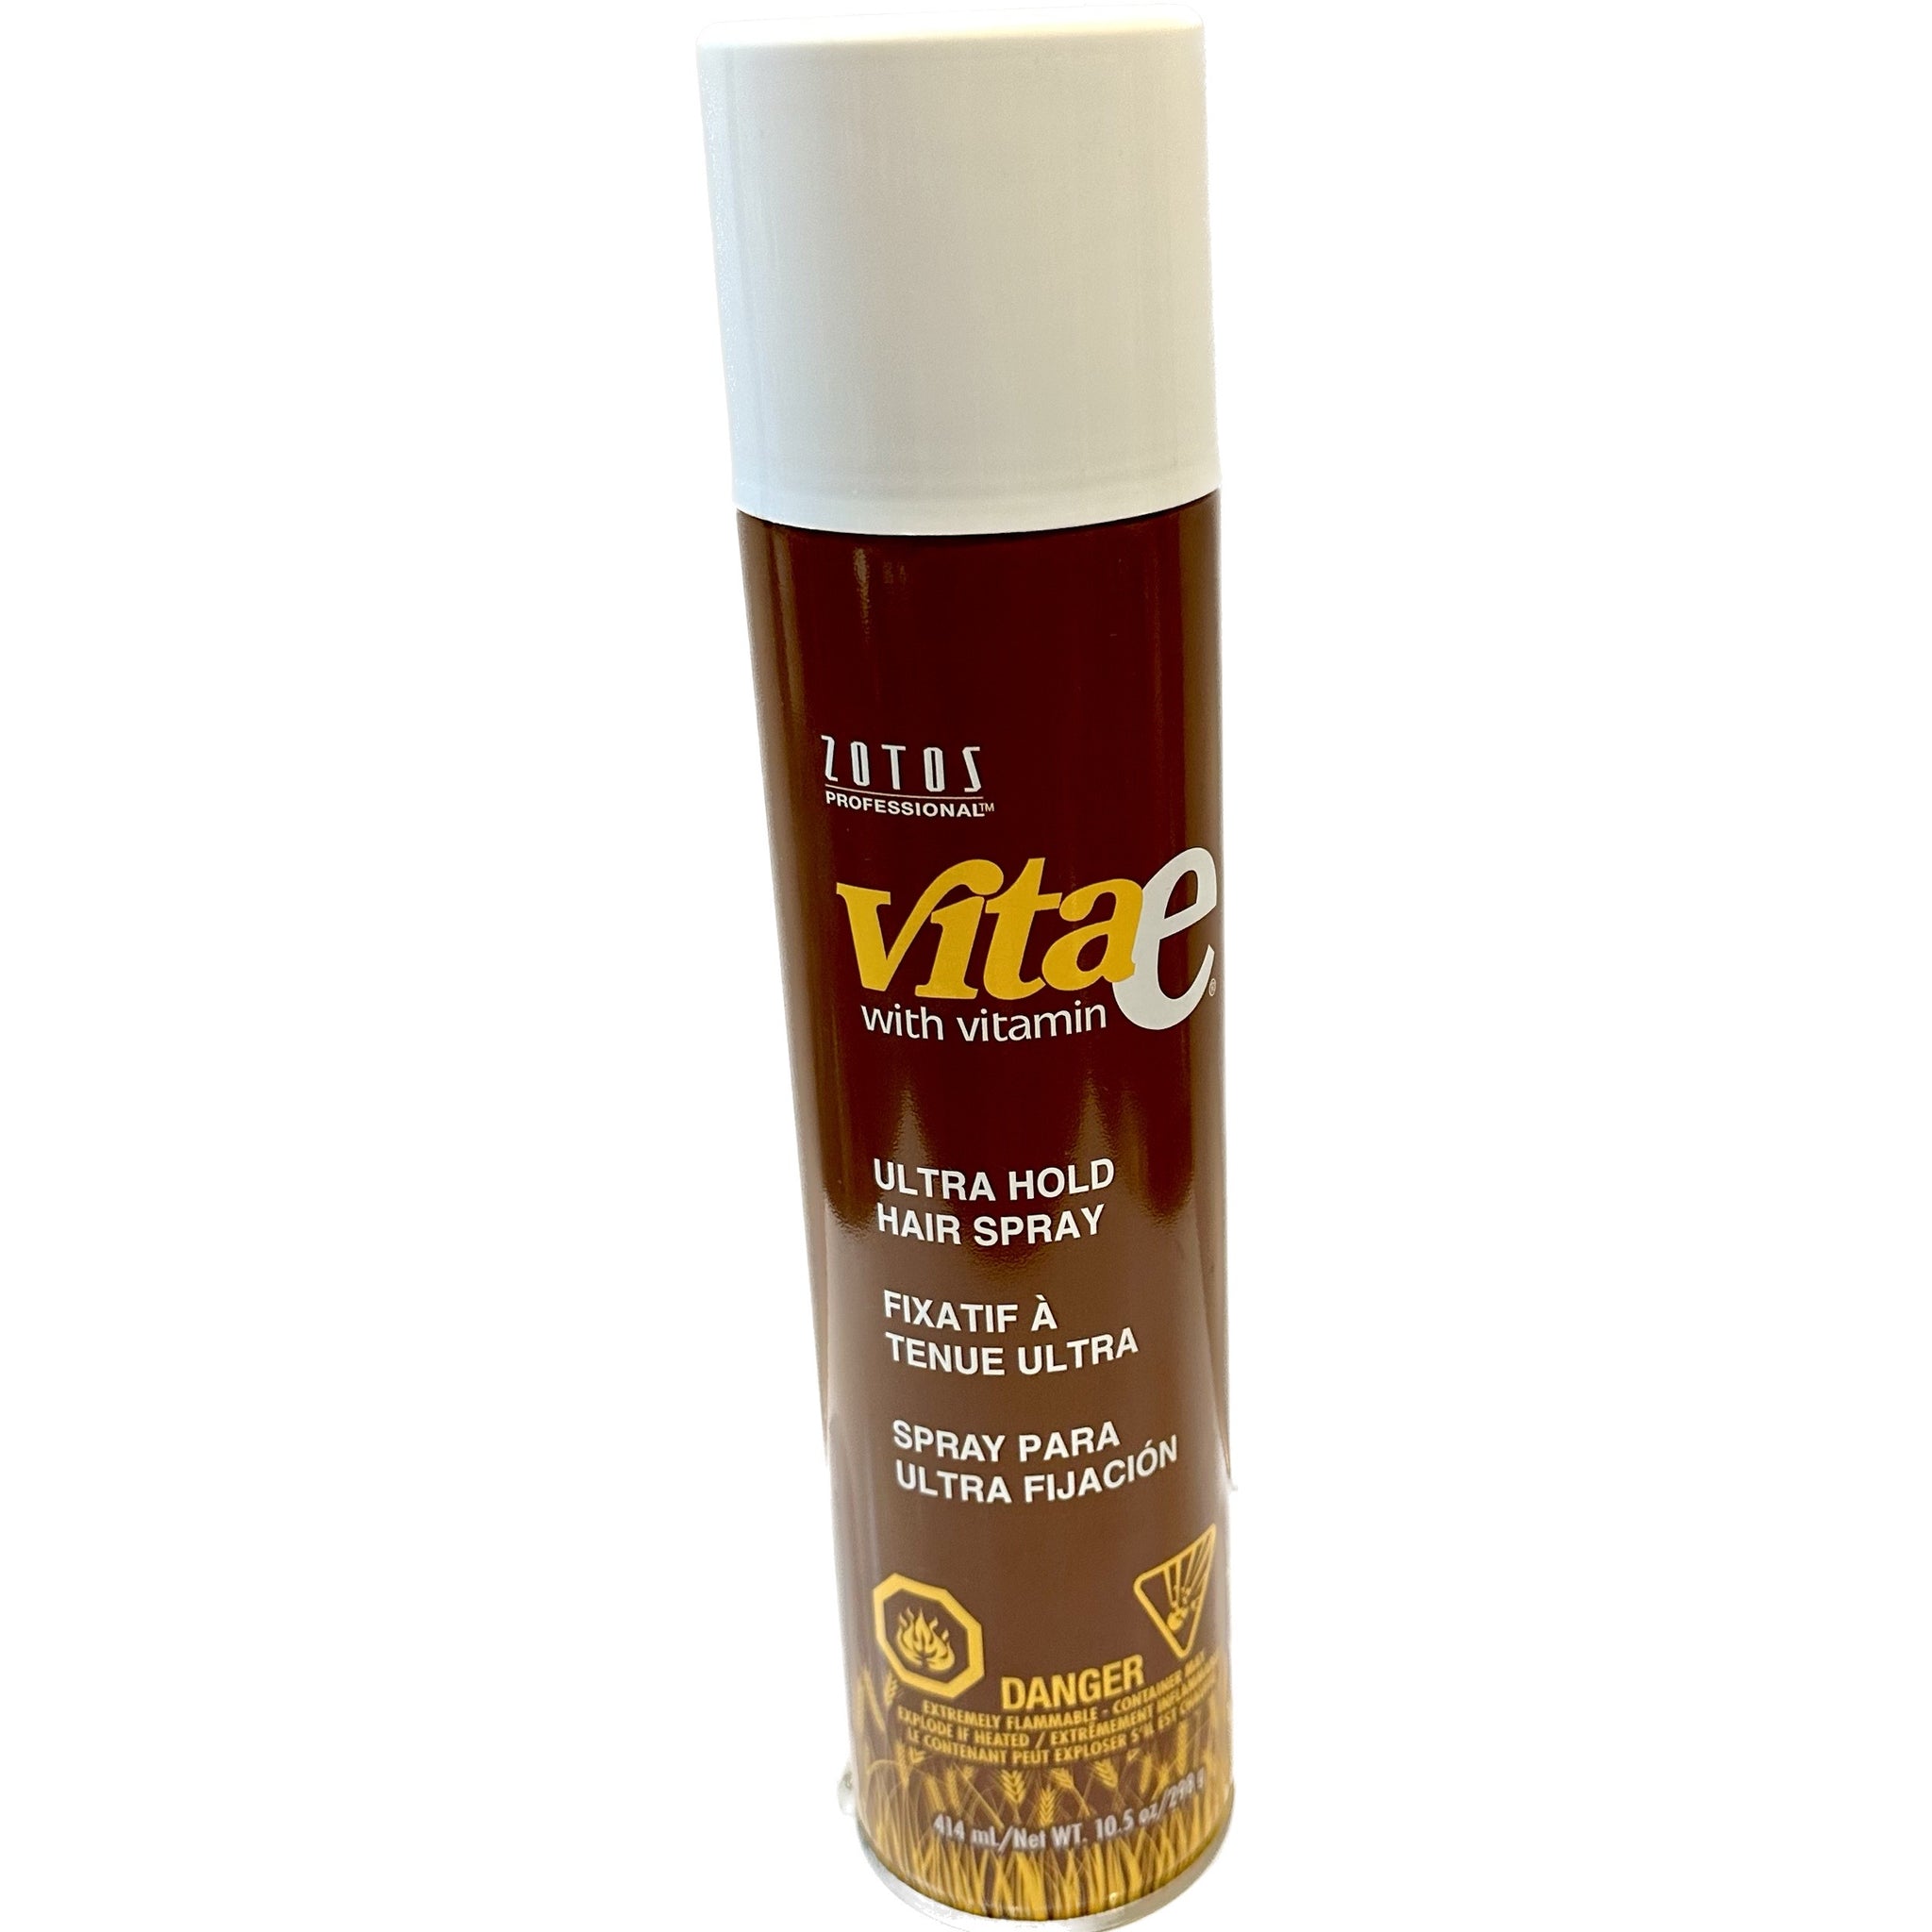 Zotos VitaE Ultra Hold Hair Spray